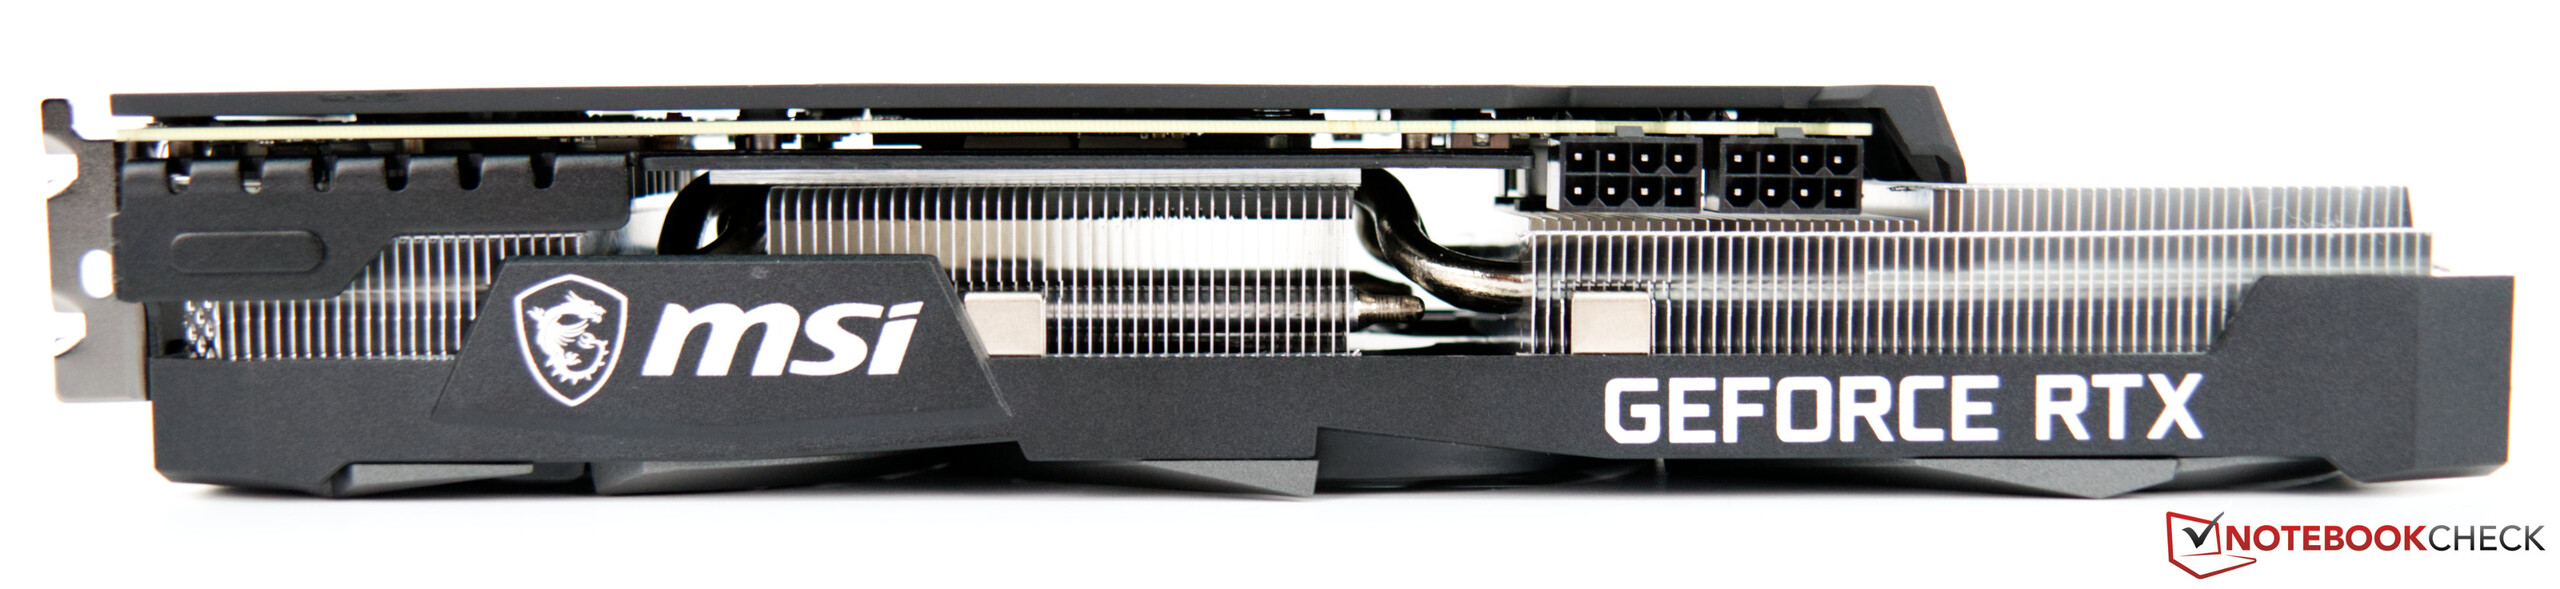 MSI GeForce RTX 3070 Ventus 3X OC desktop graphics card in review 